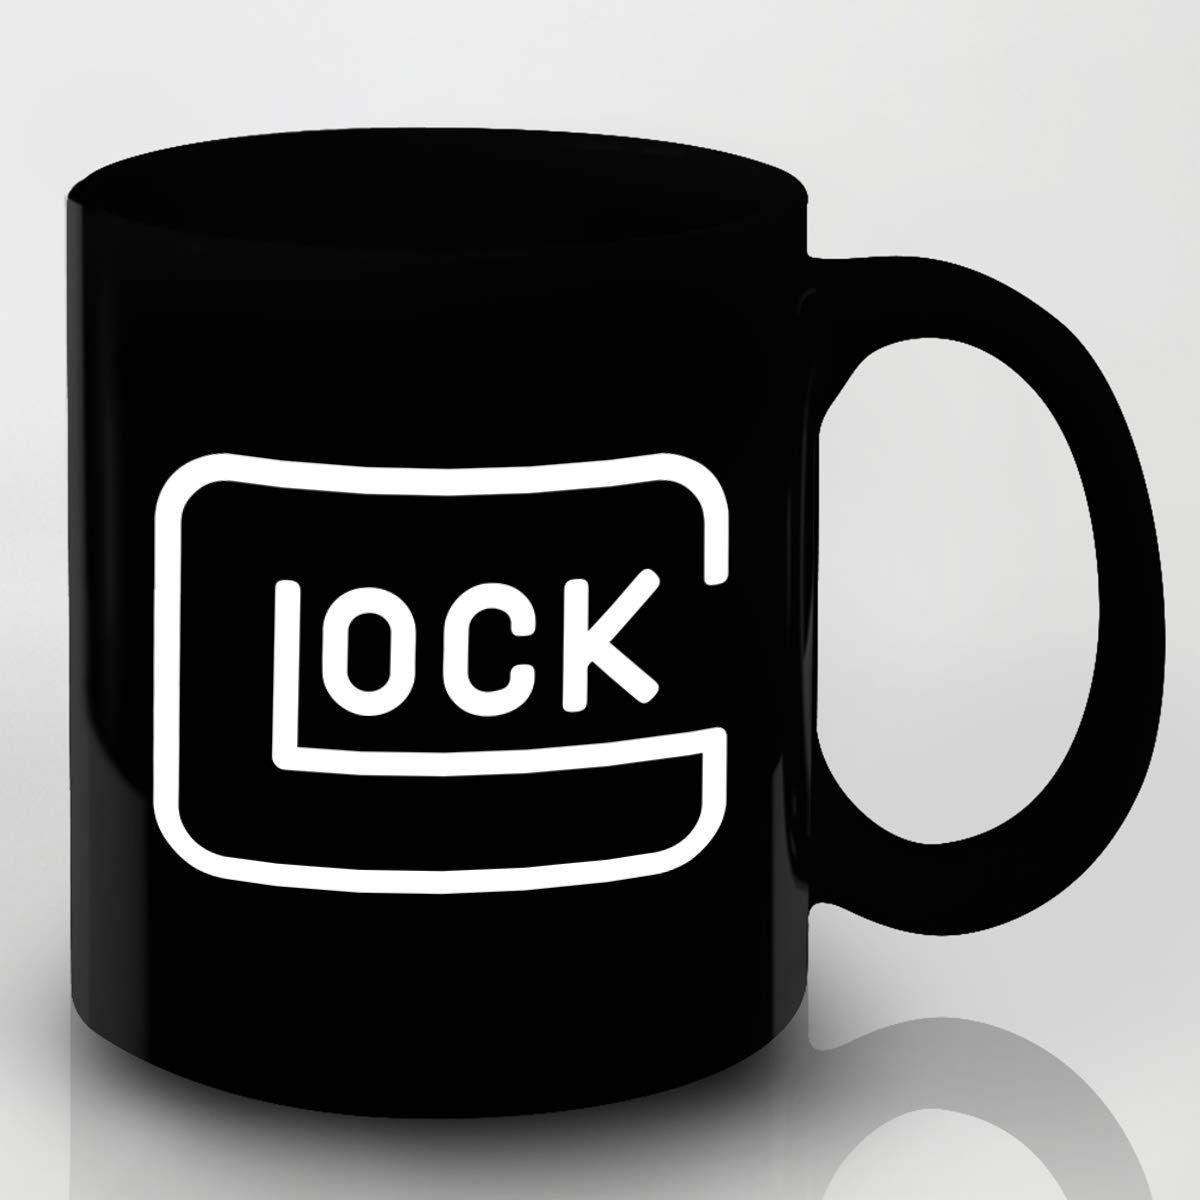 Glock Logo - Amazon.com: Glock Mug - Glock Logo Coffee Cup - Best Accessory and ...